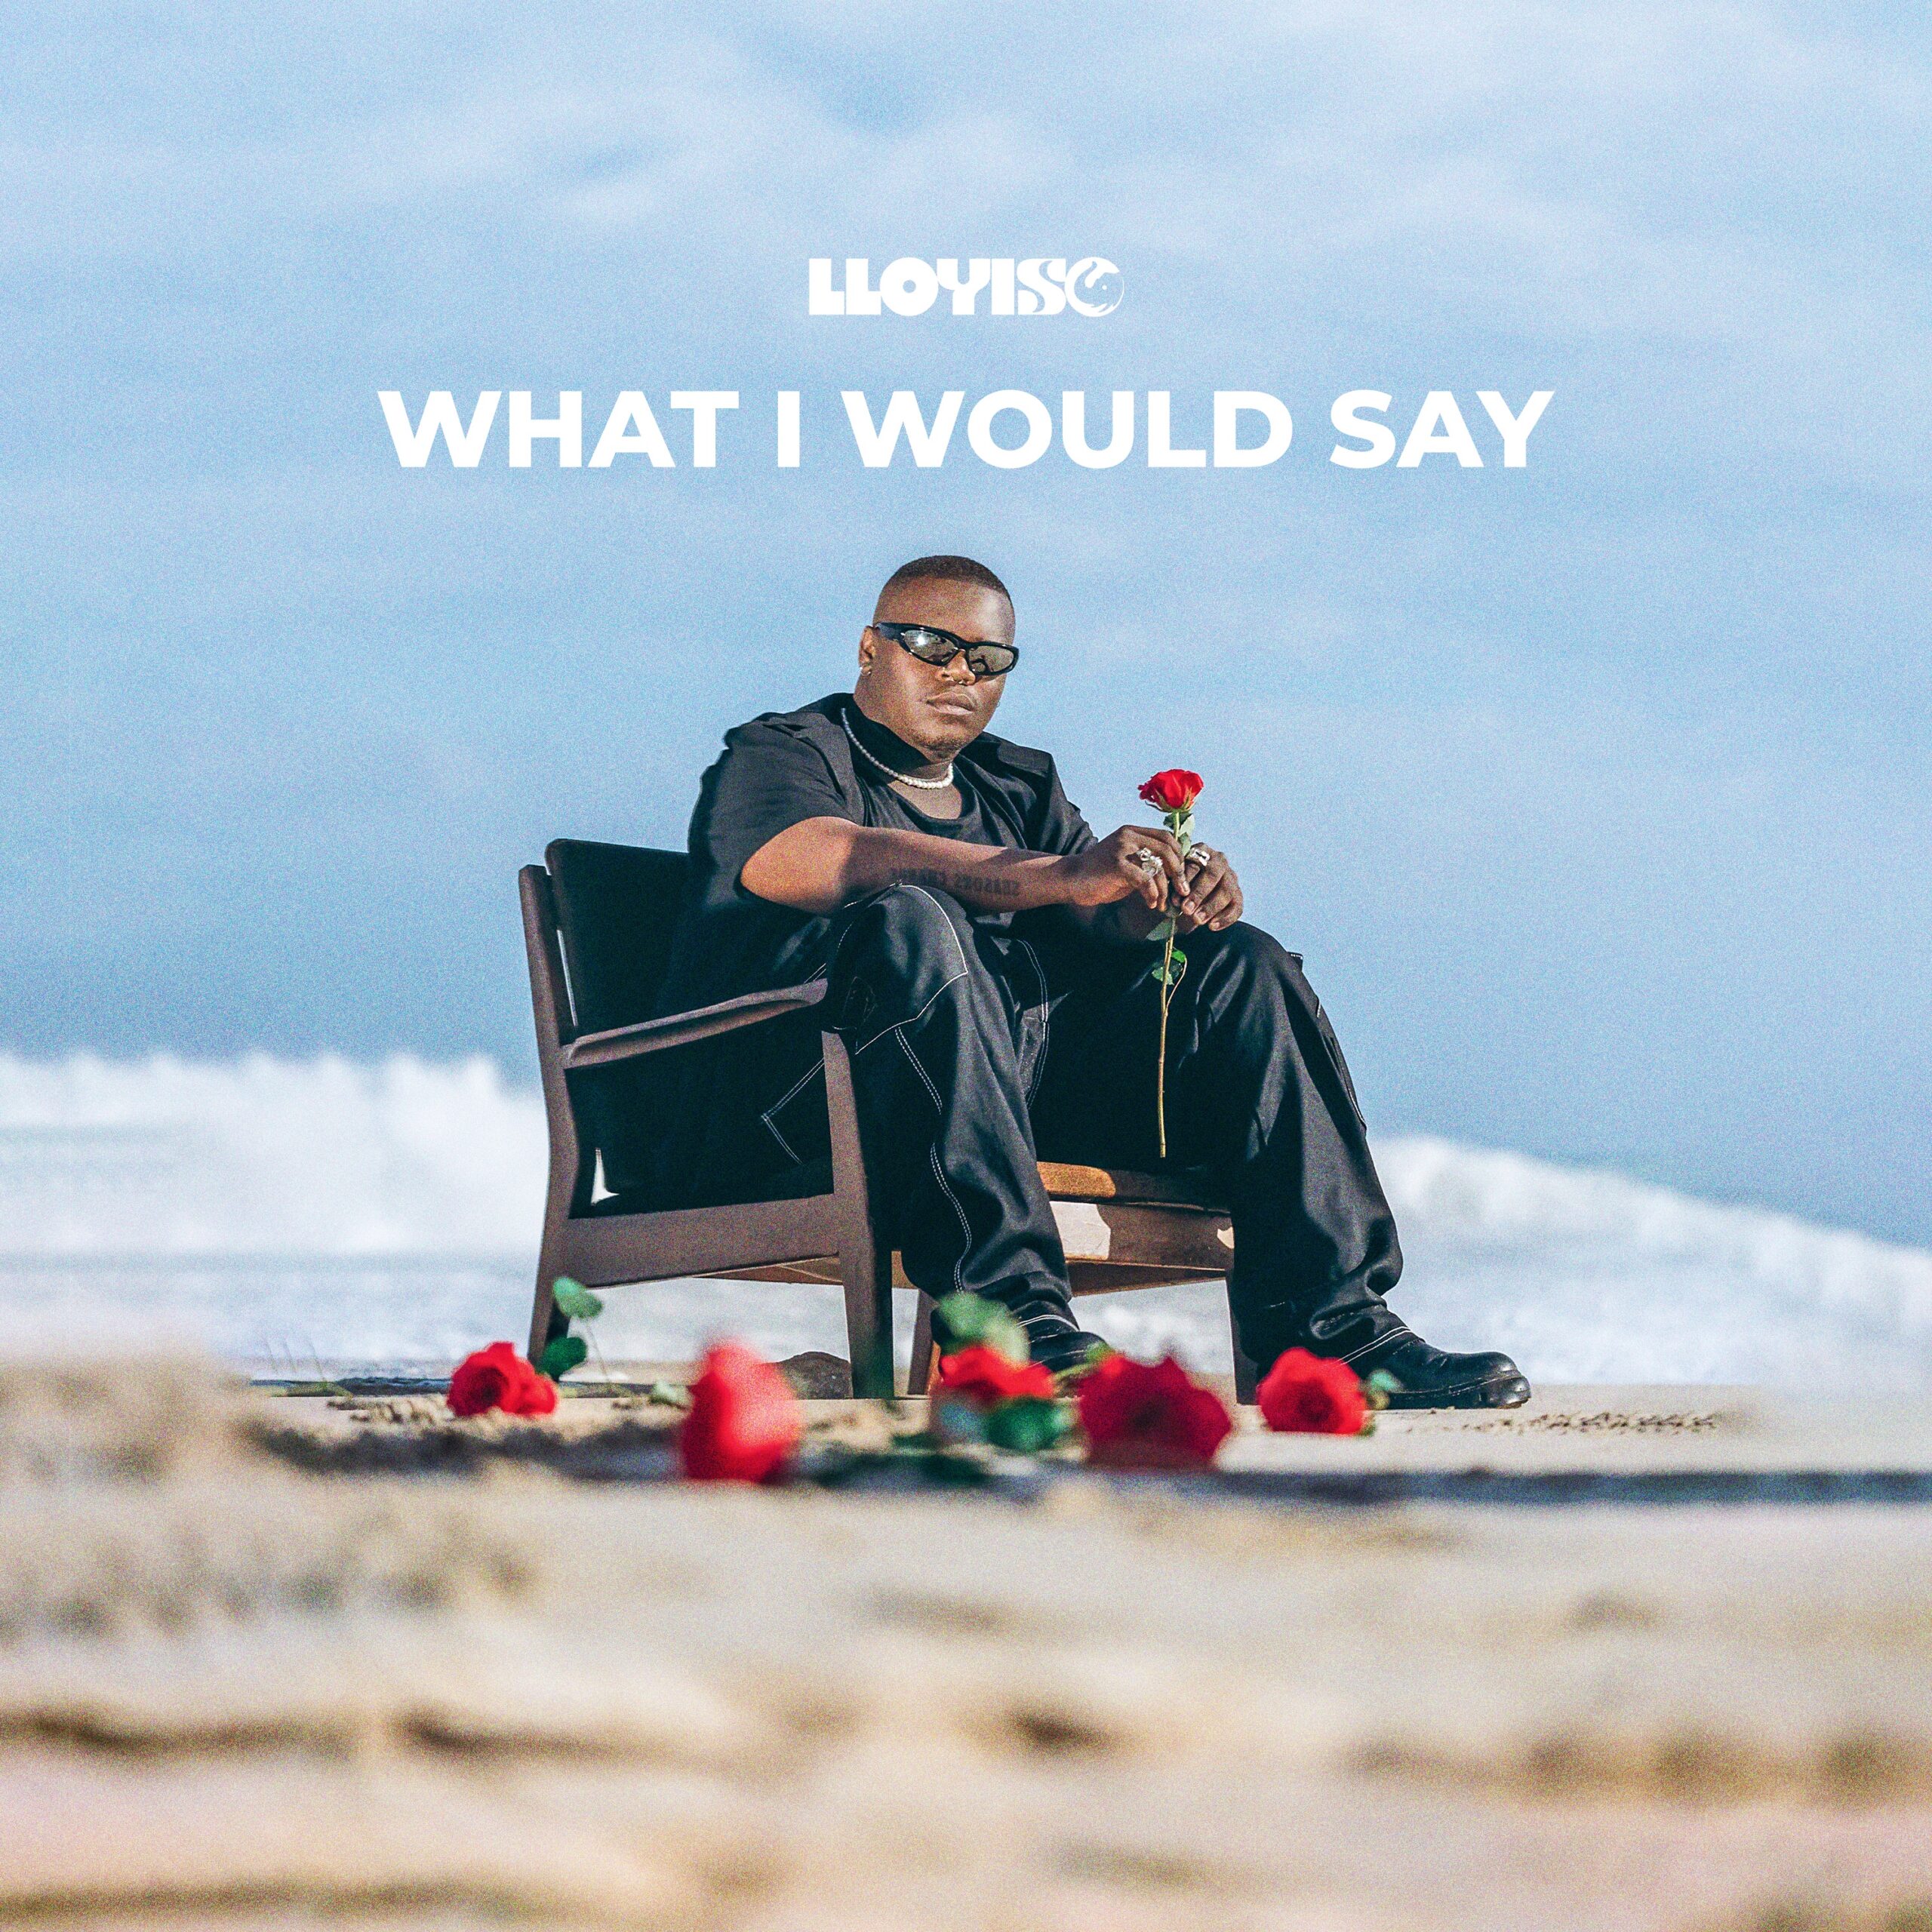 LLOYISO - “WHAT I WOULD SAY” via 360 MAGAZINE